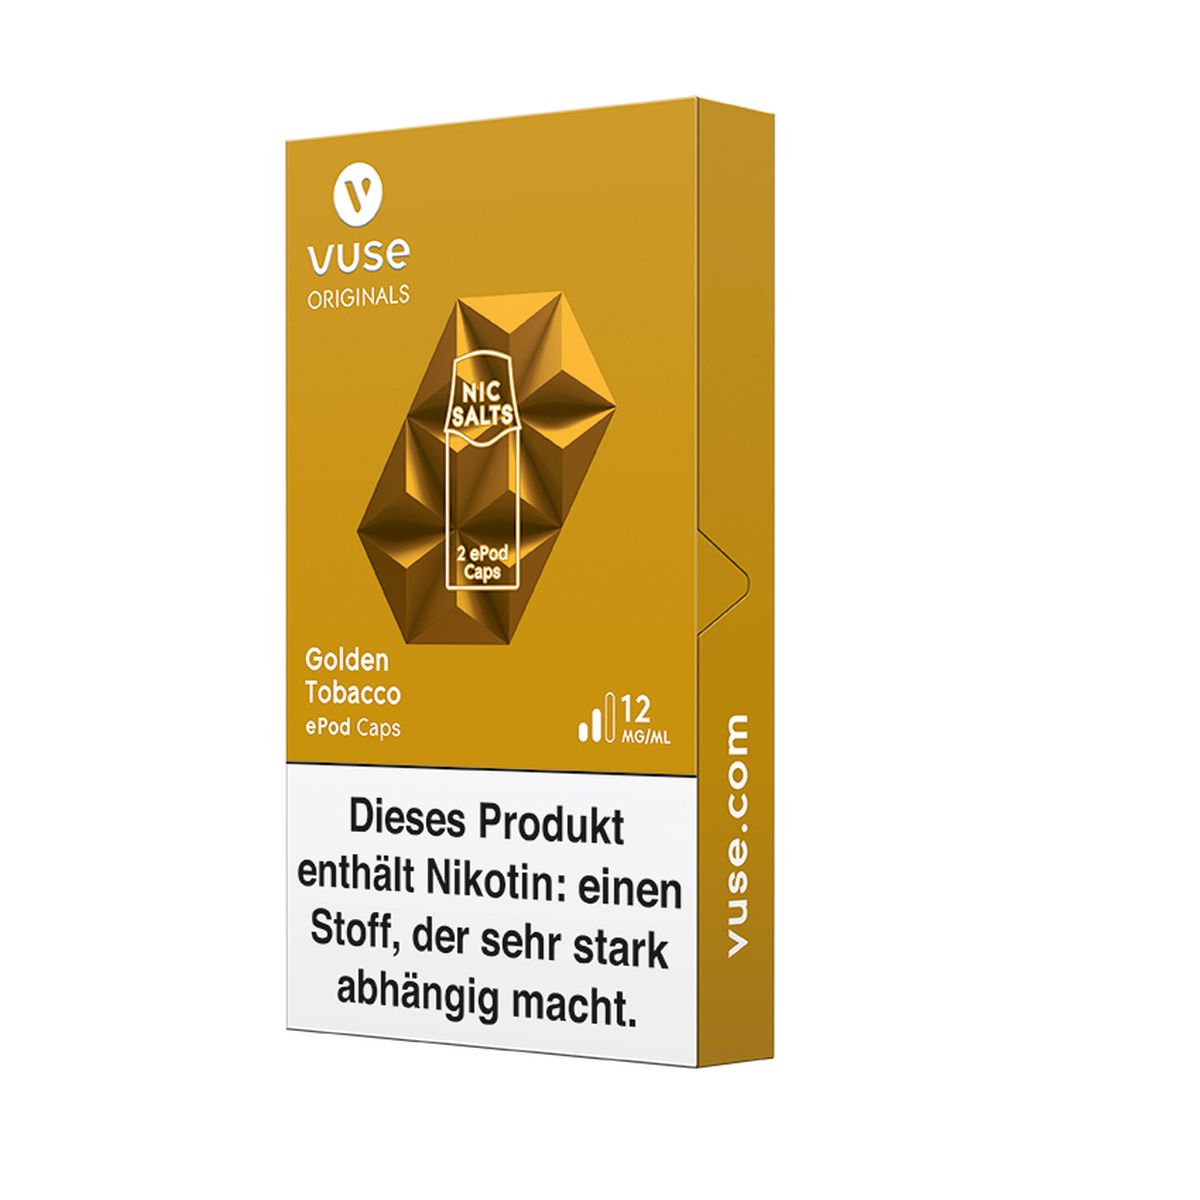 Vuse Vuse ePod Caps Golden Tobacco Nic Salts 12mg Nikotin 1,9ml bei www.Tabakring.de kaufen